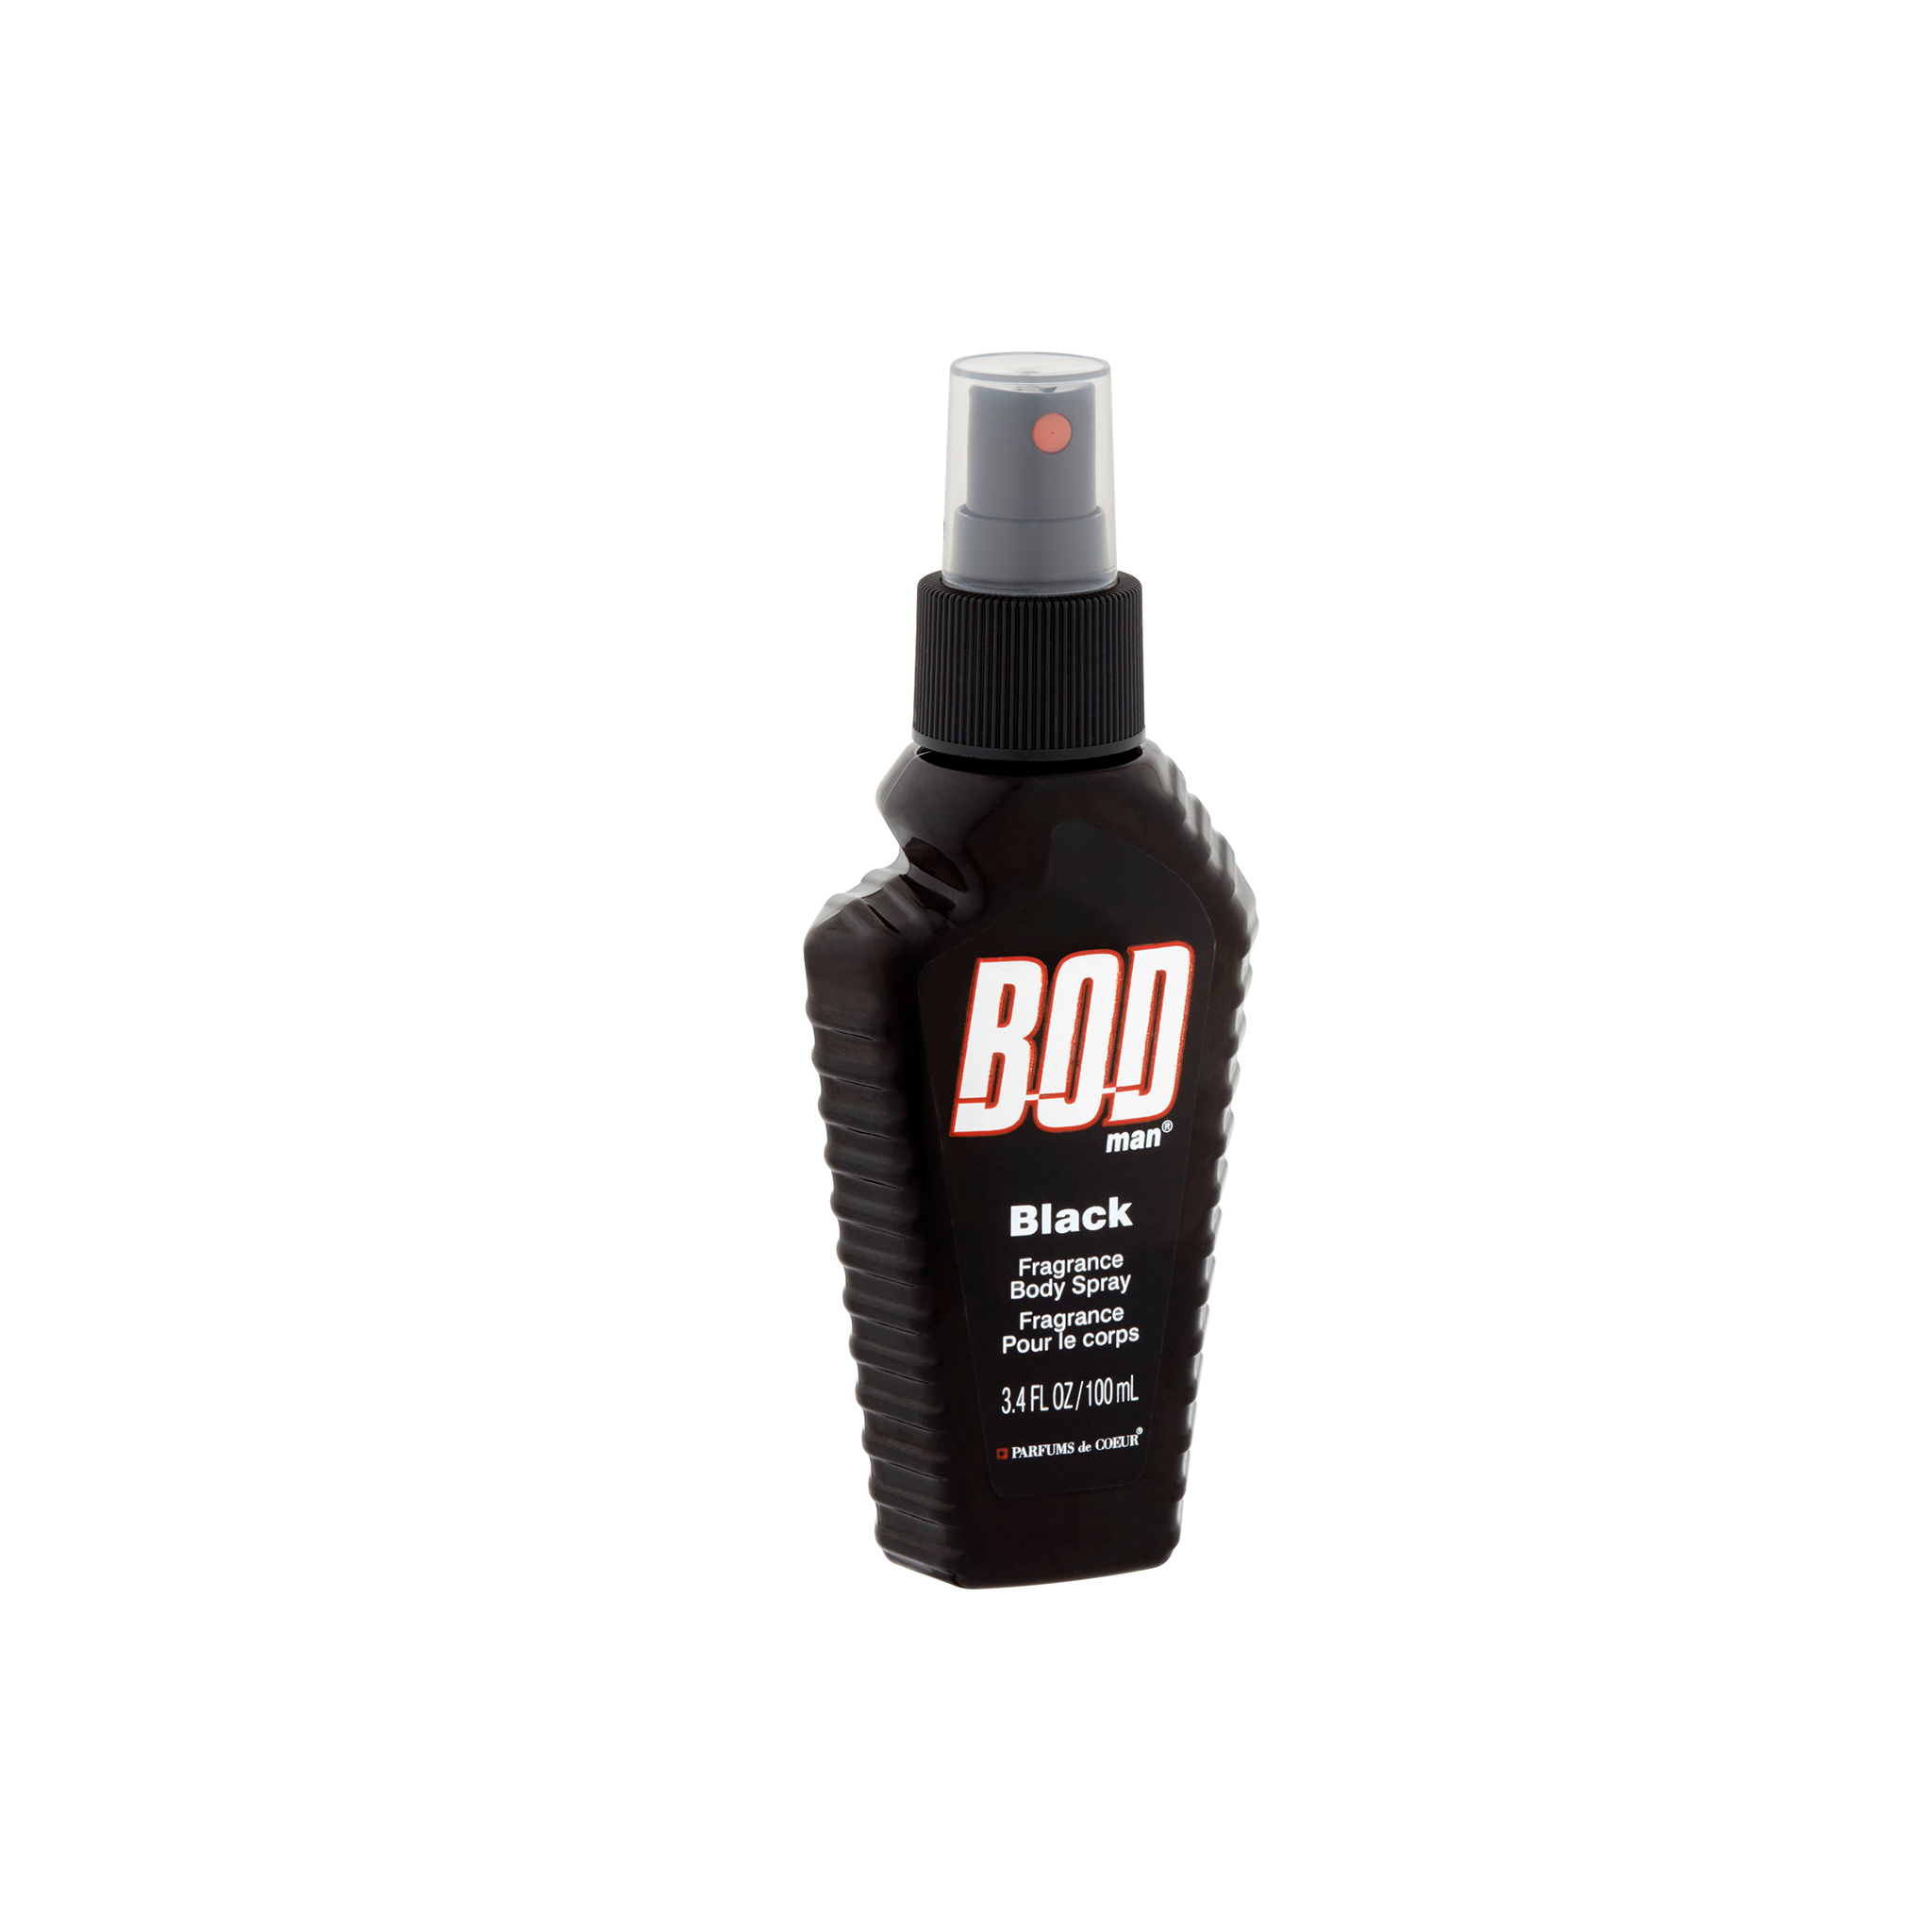 hot bod body spray